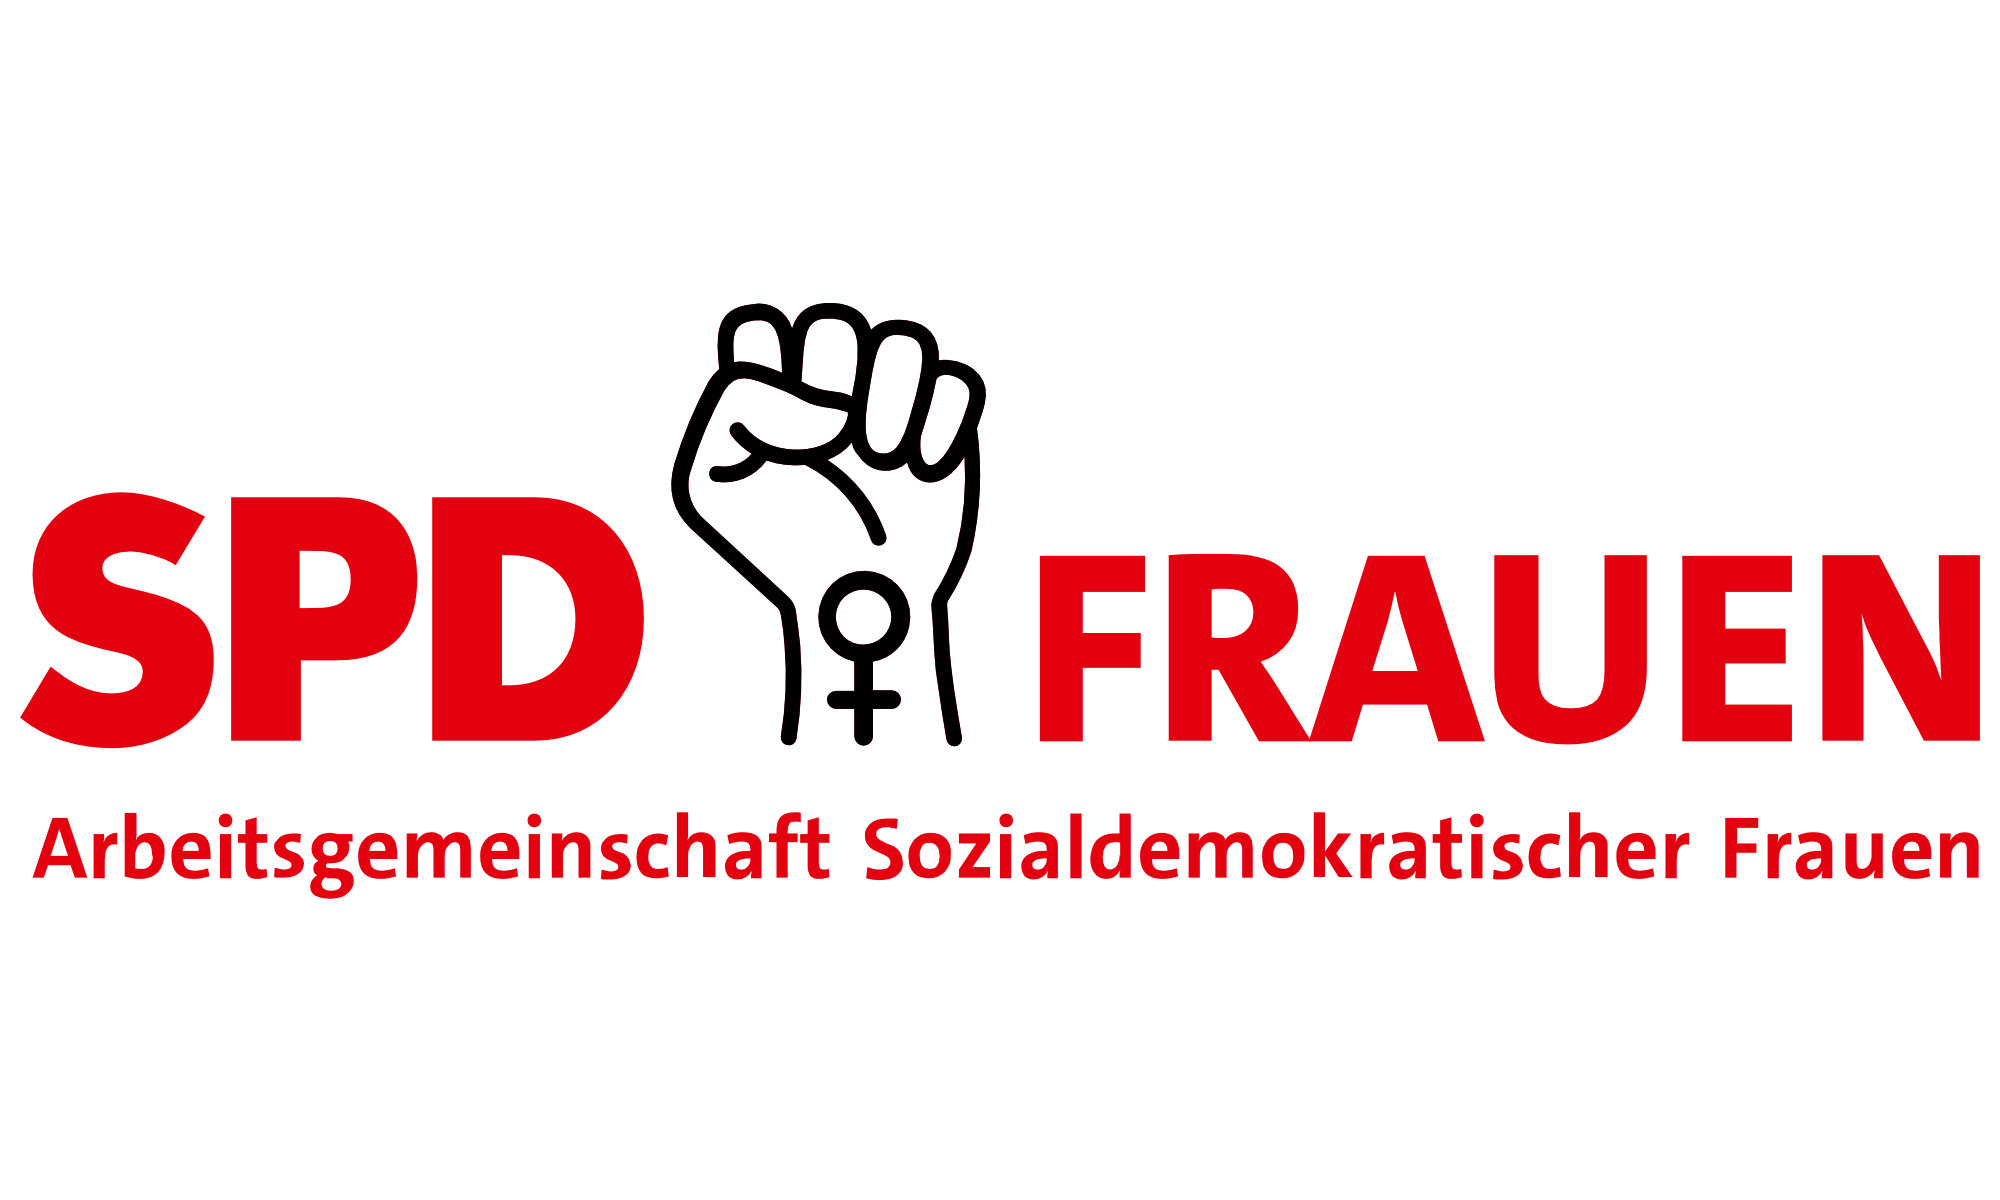 SPD FRAUEN